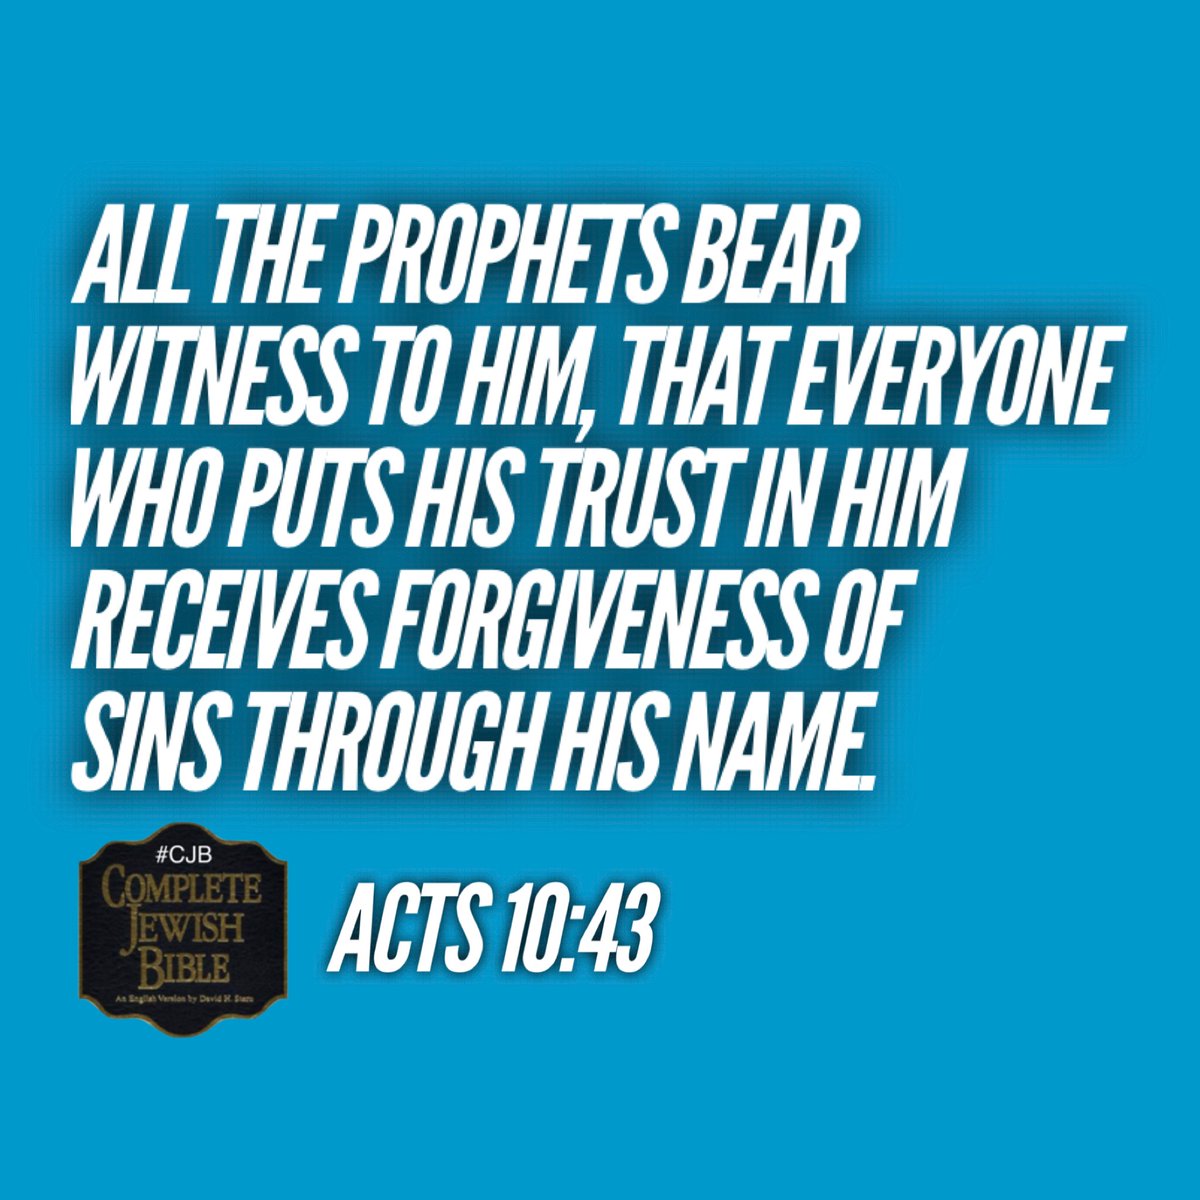 Acts 10:43 #CJB #CompleteJewishBible #VerseOfTheDay